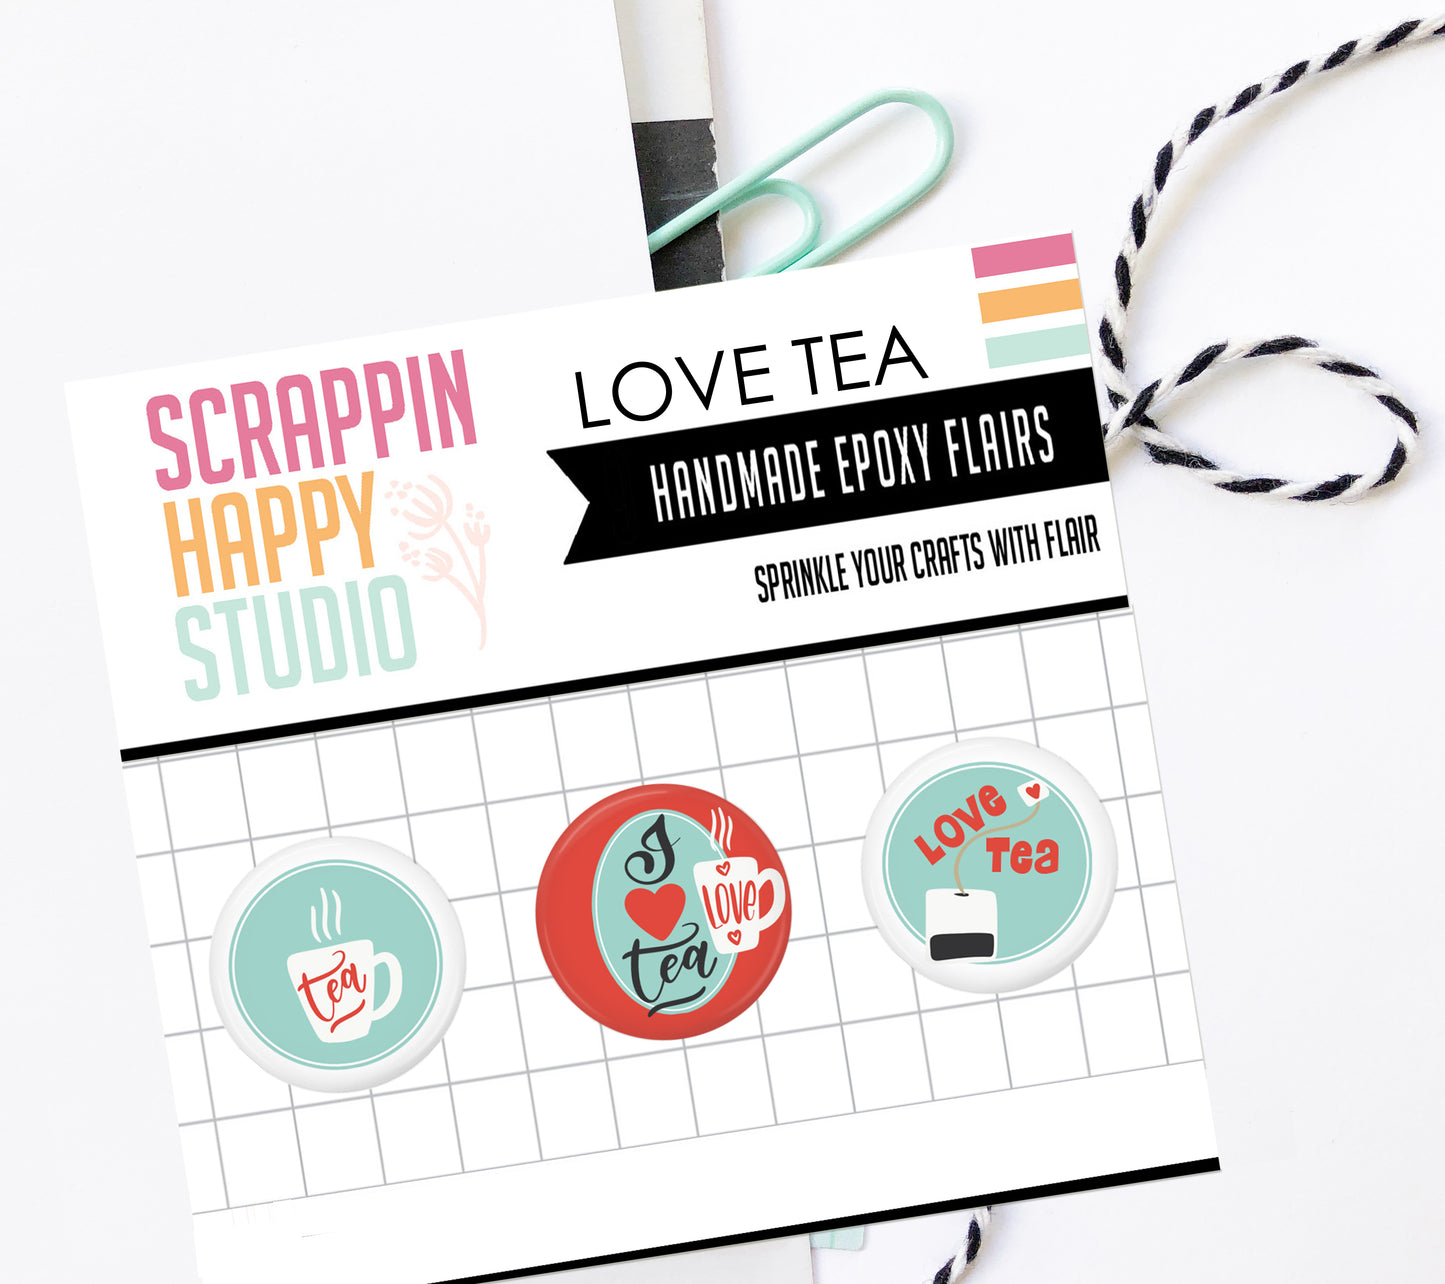 Love Tea Epoxy Flair